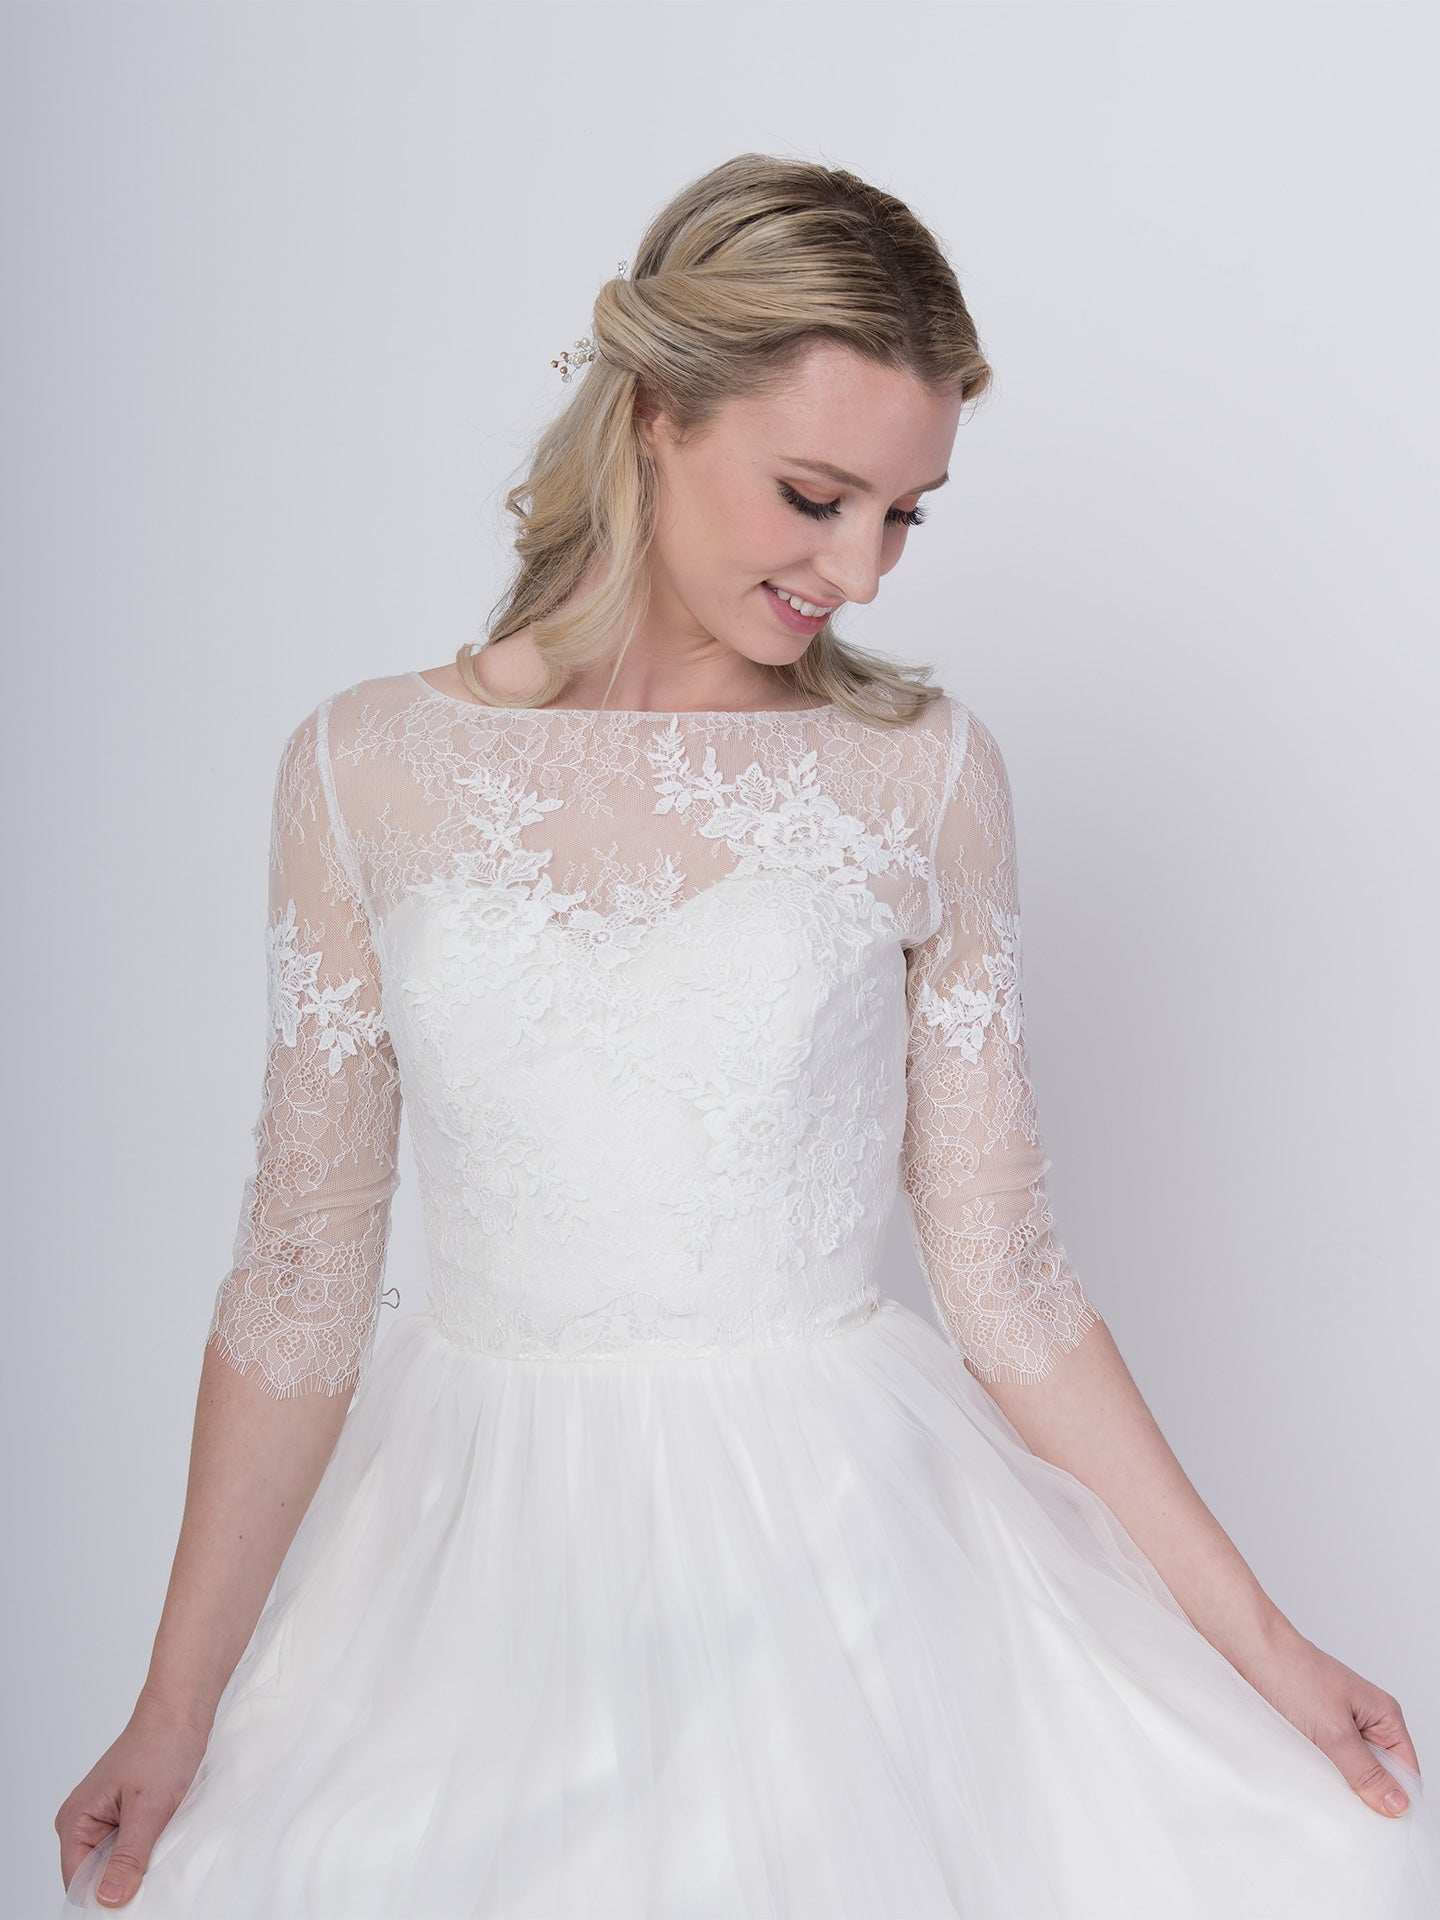 Lace wedding dress topper elbow length sleeve WJ053